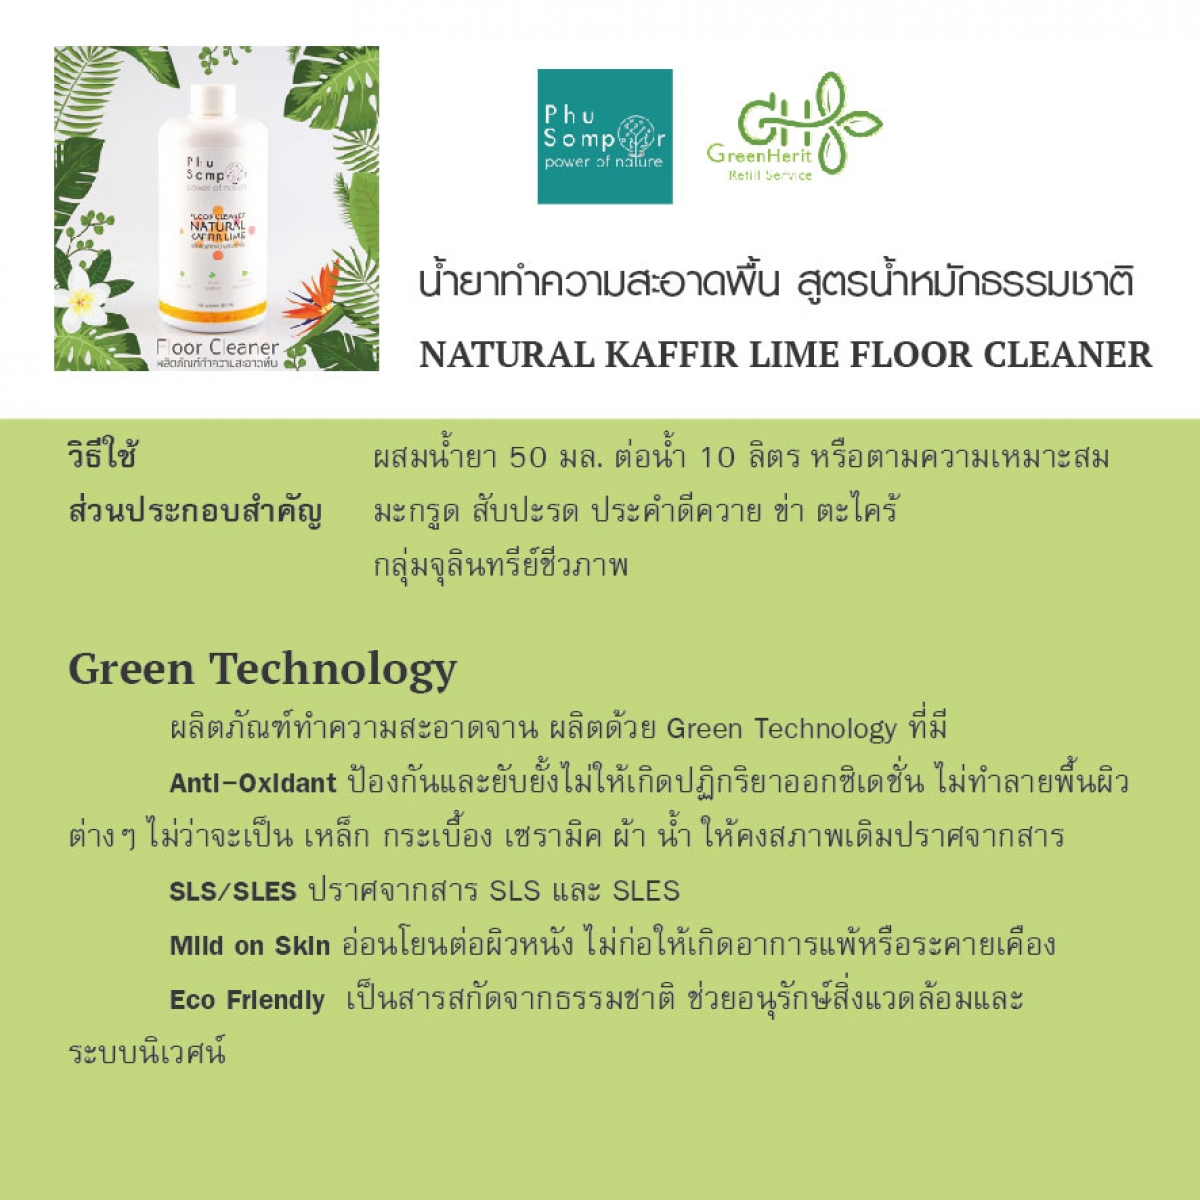 Organic Product > Phu Somphor Floor Cleaner